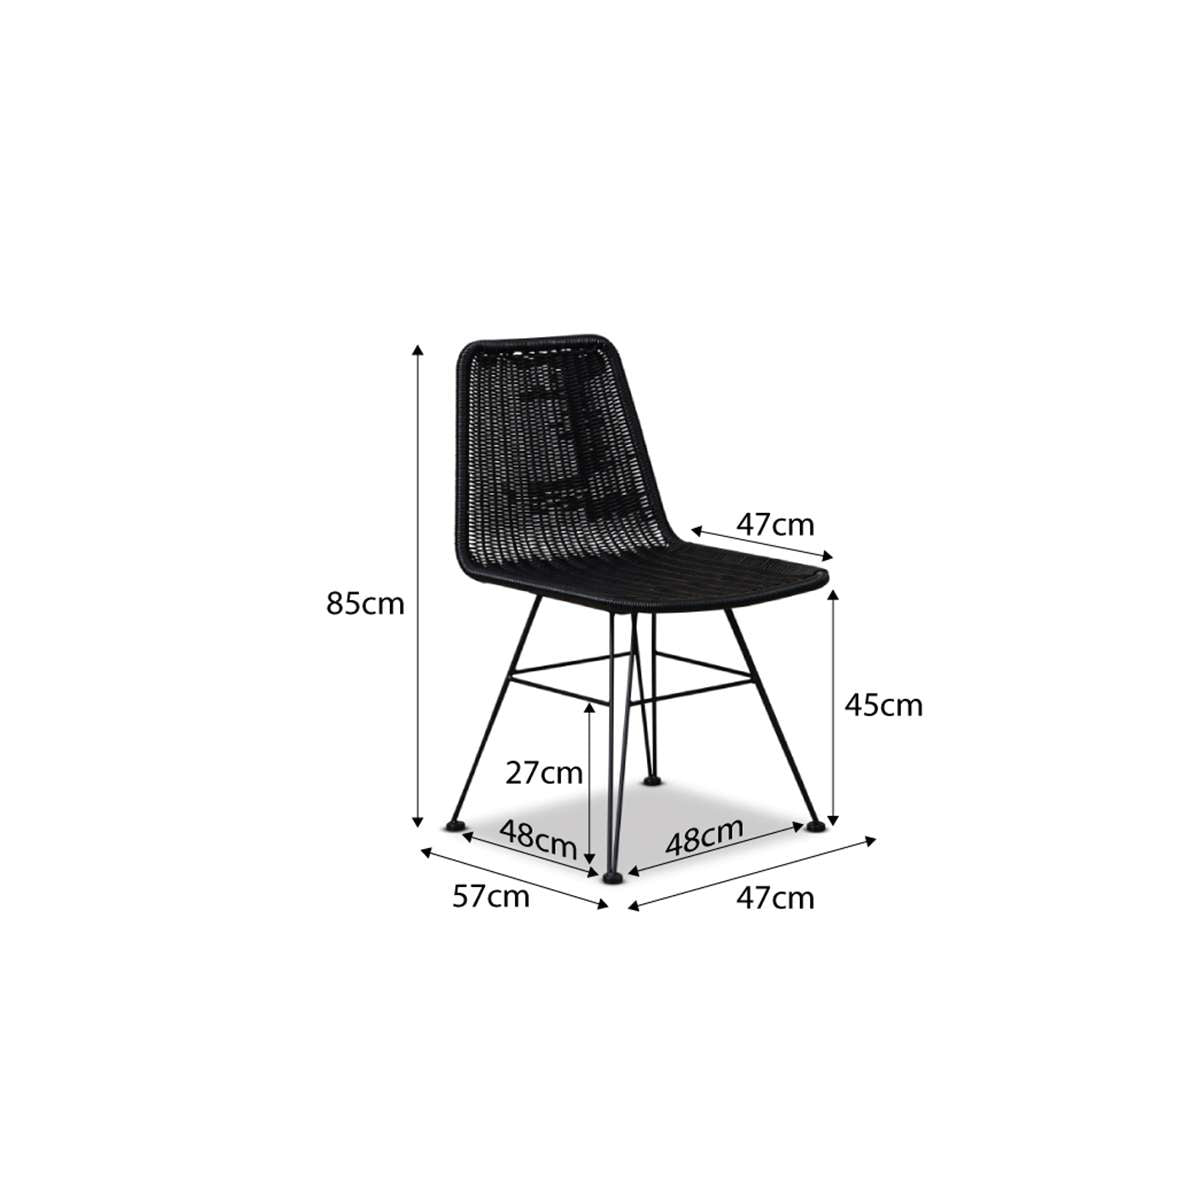 Xavier Dining Chair - Set of 2 - Black